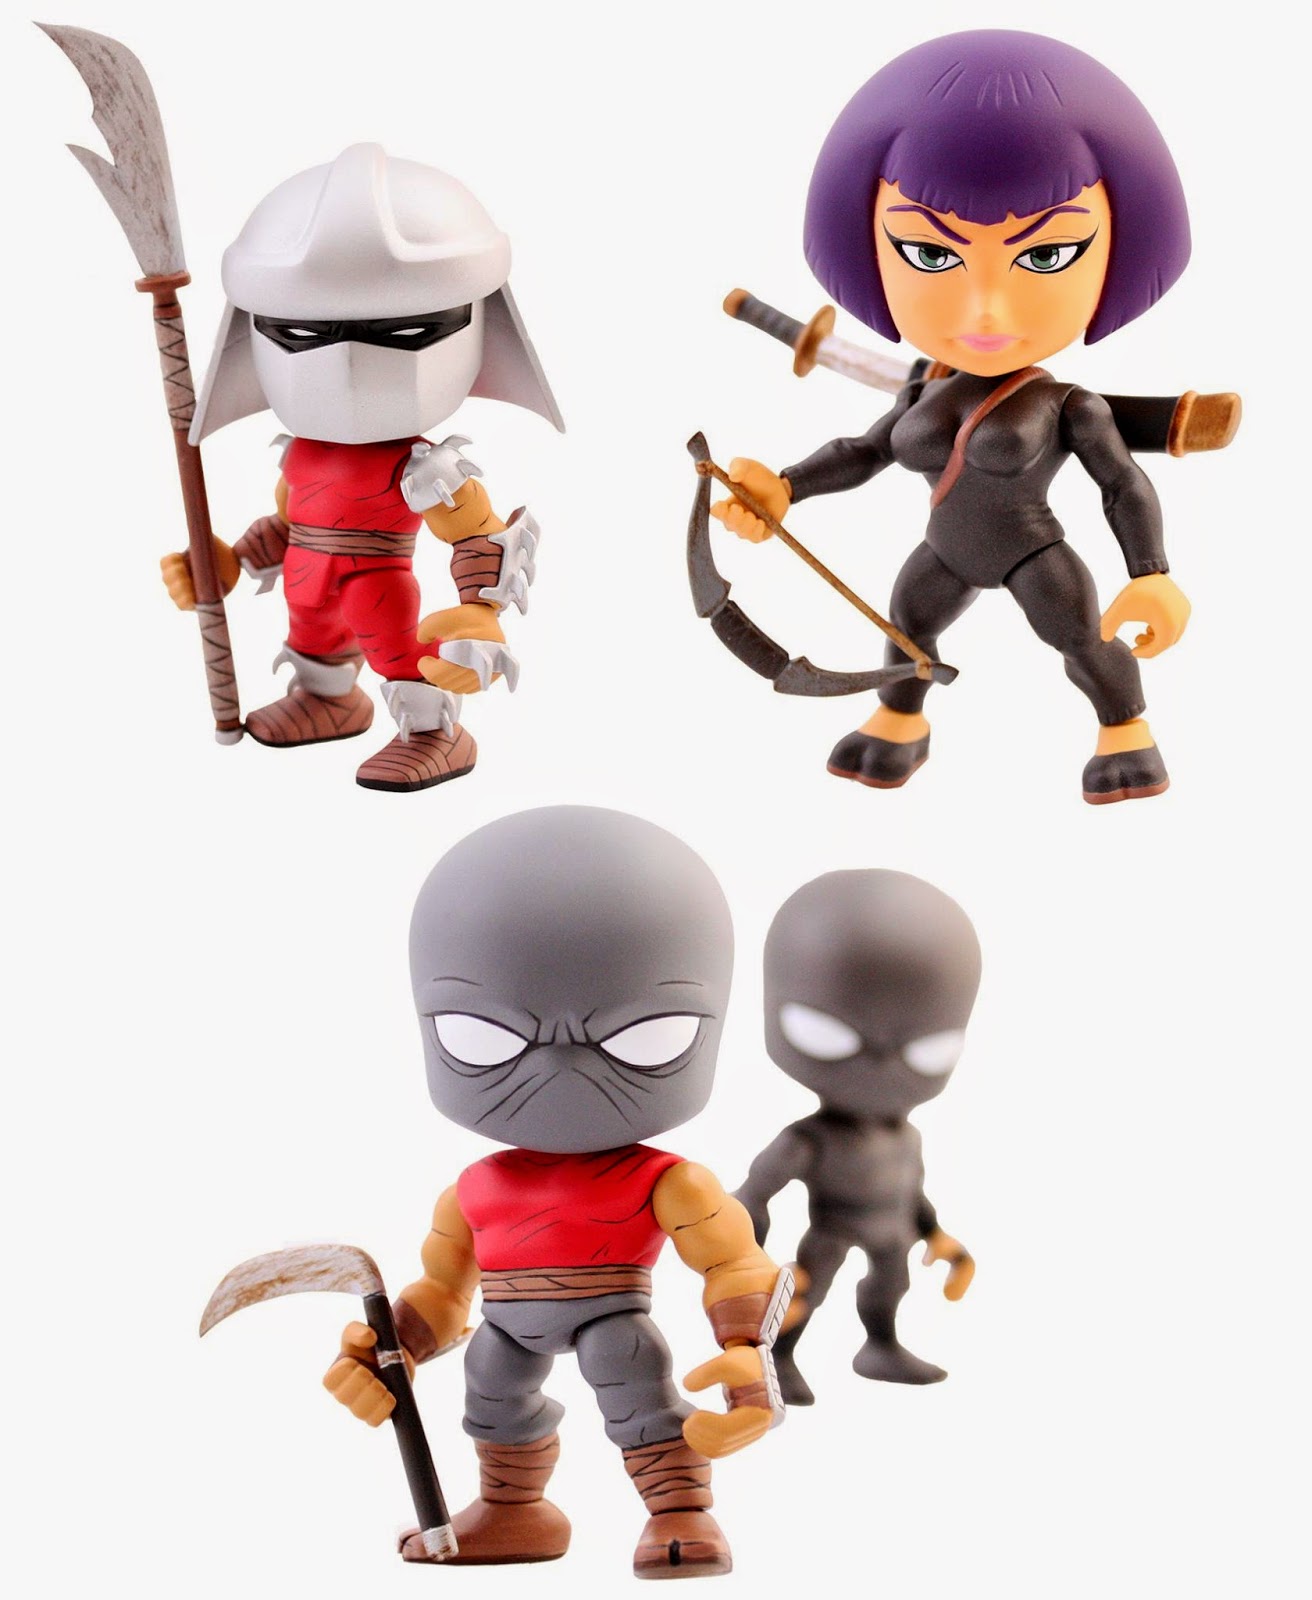 Teenage Mutant Ninja Turtles Mini Figure Series by The Loyal Subjects - Shredder, Karai, and 2 Foot Clan Soldiers